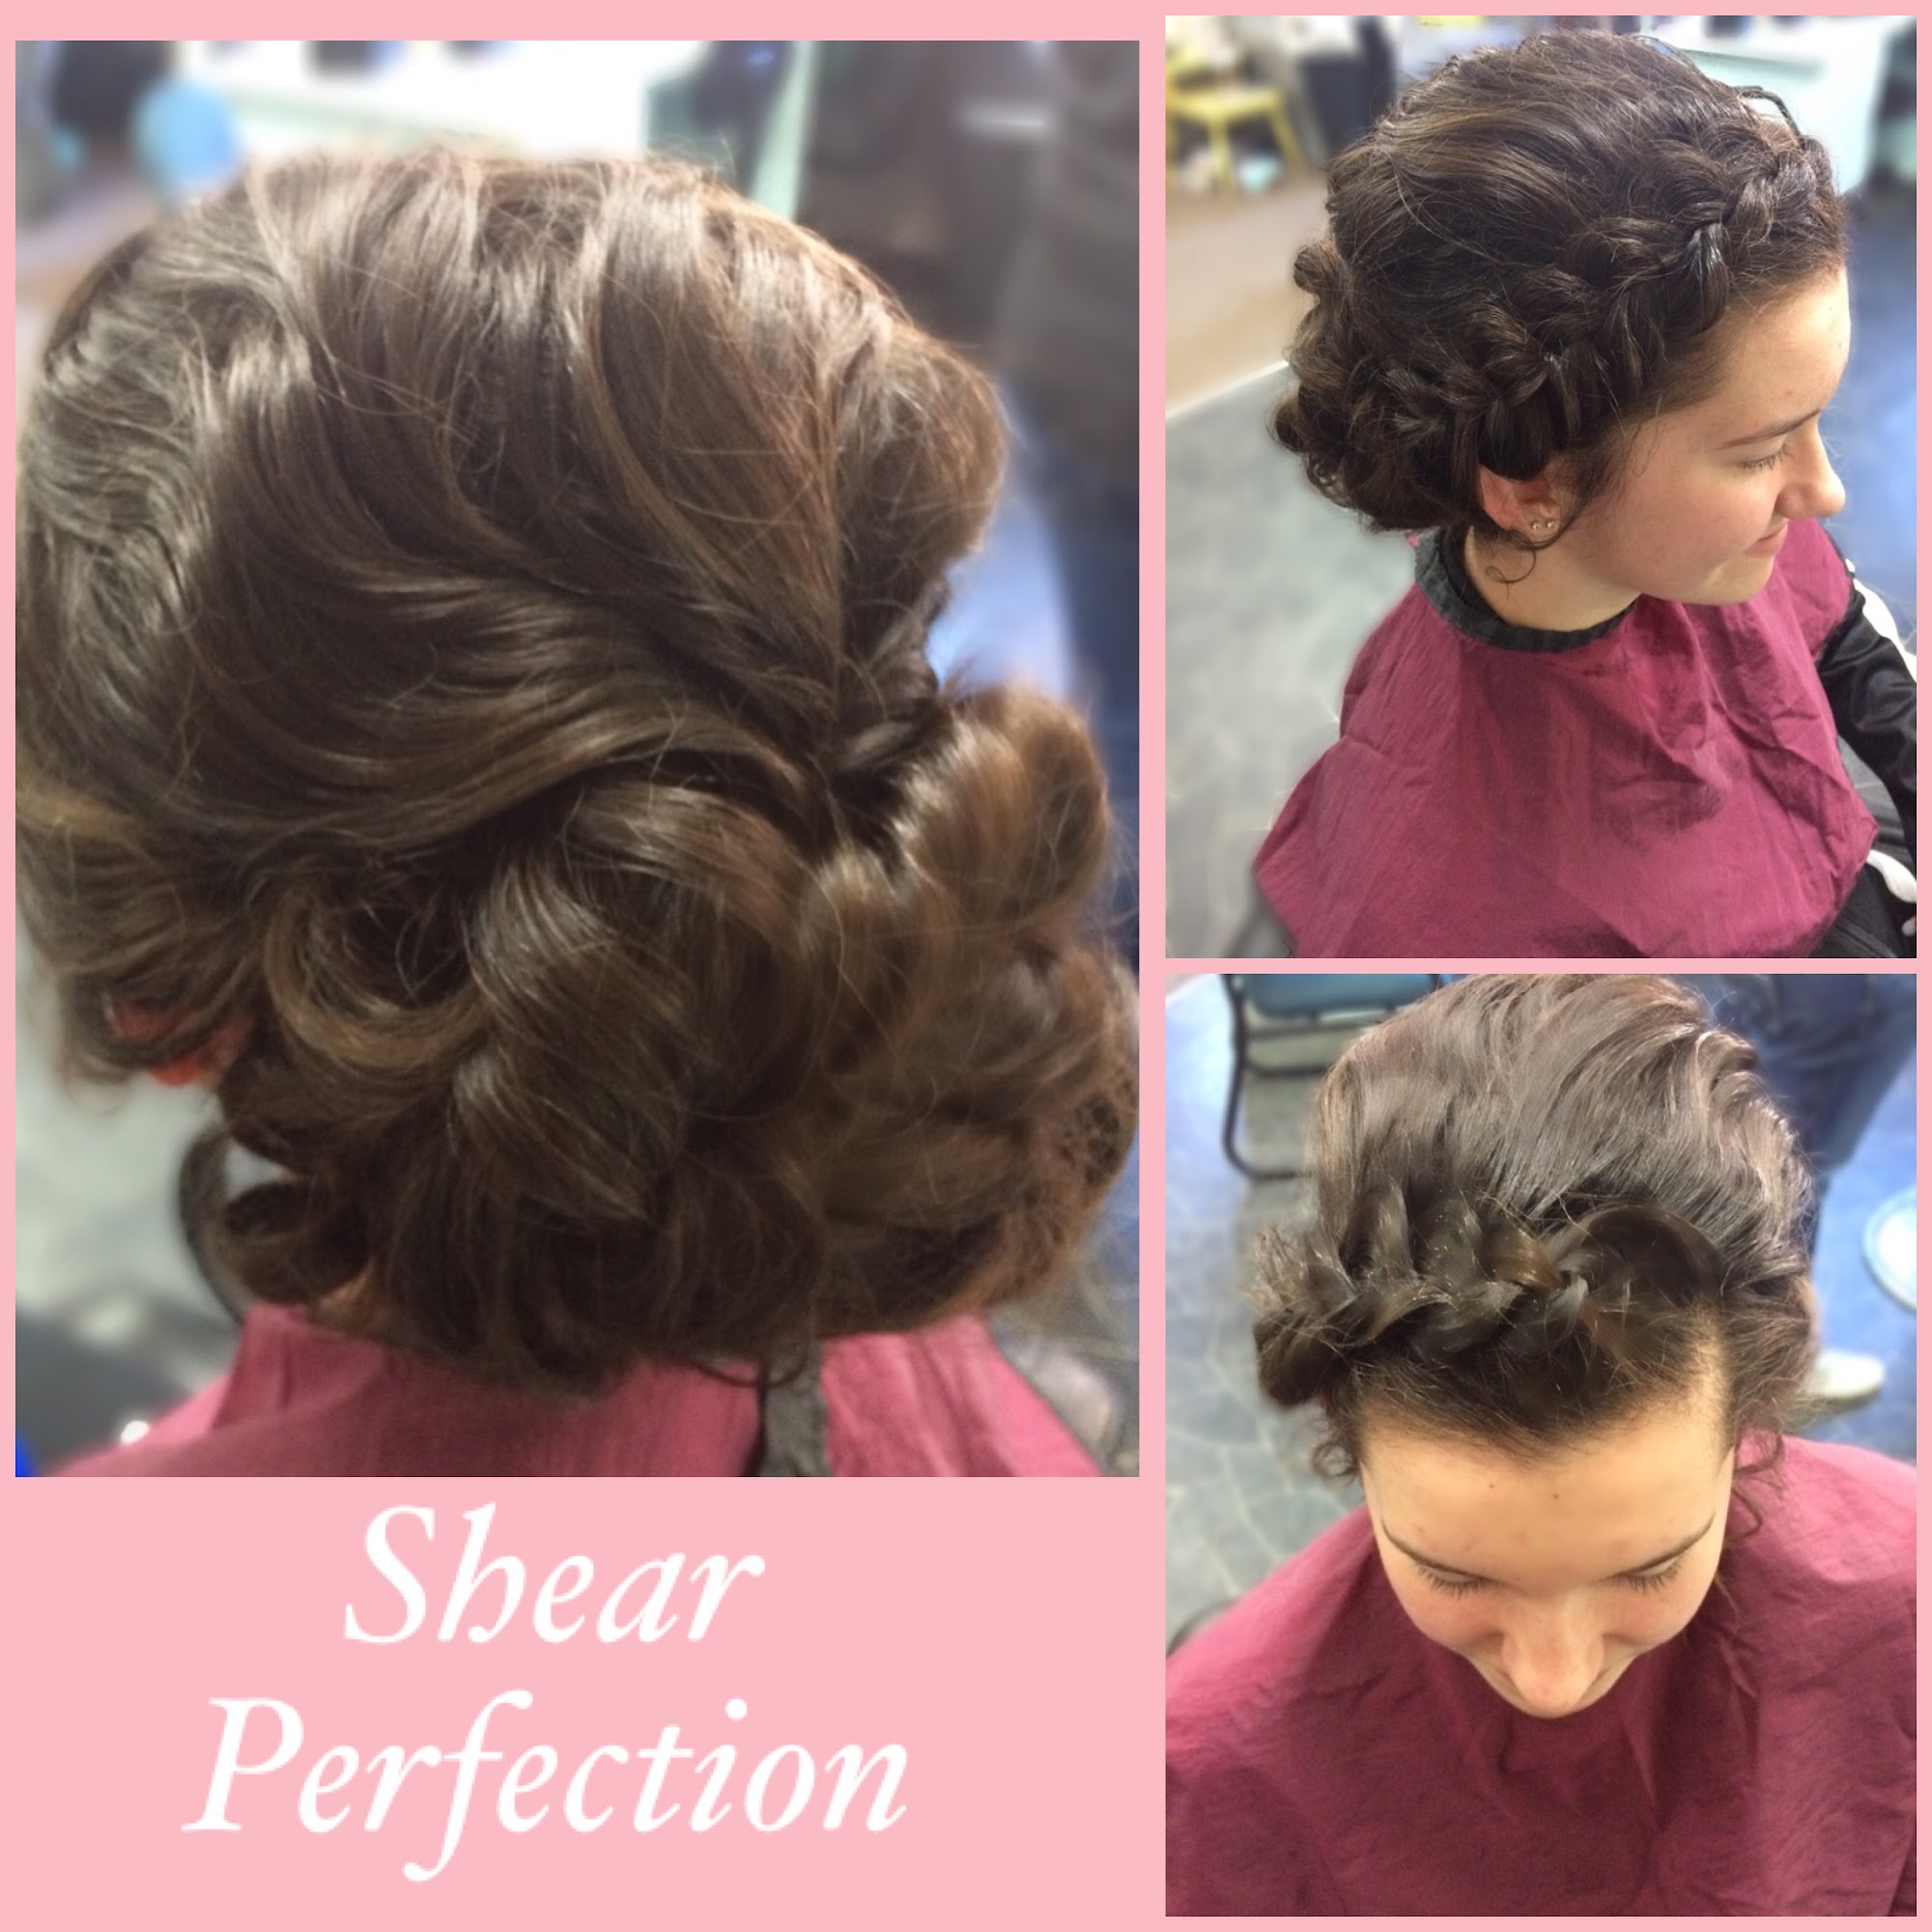 Shear Perfection Beauty Salon 317 Main Ave N, Lake Preston South Dakota 57249